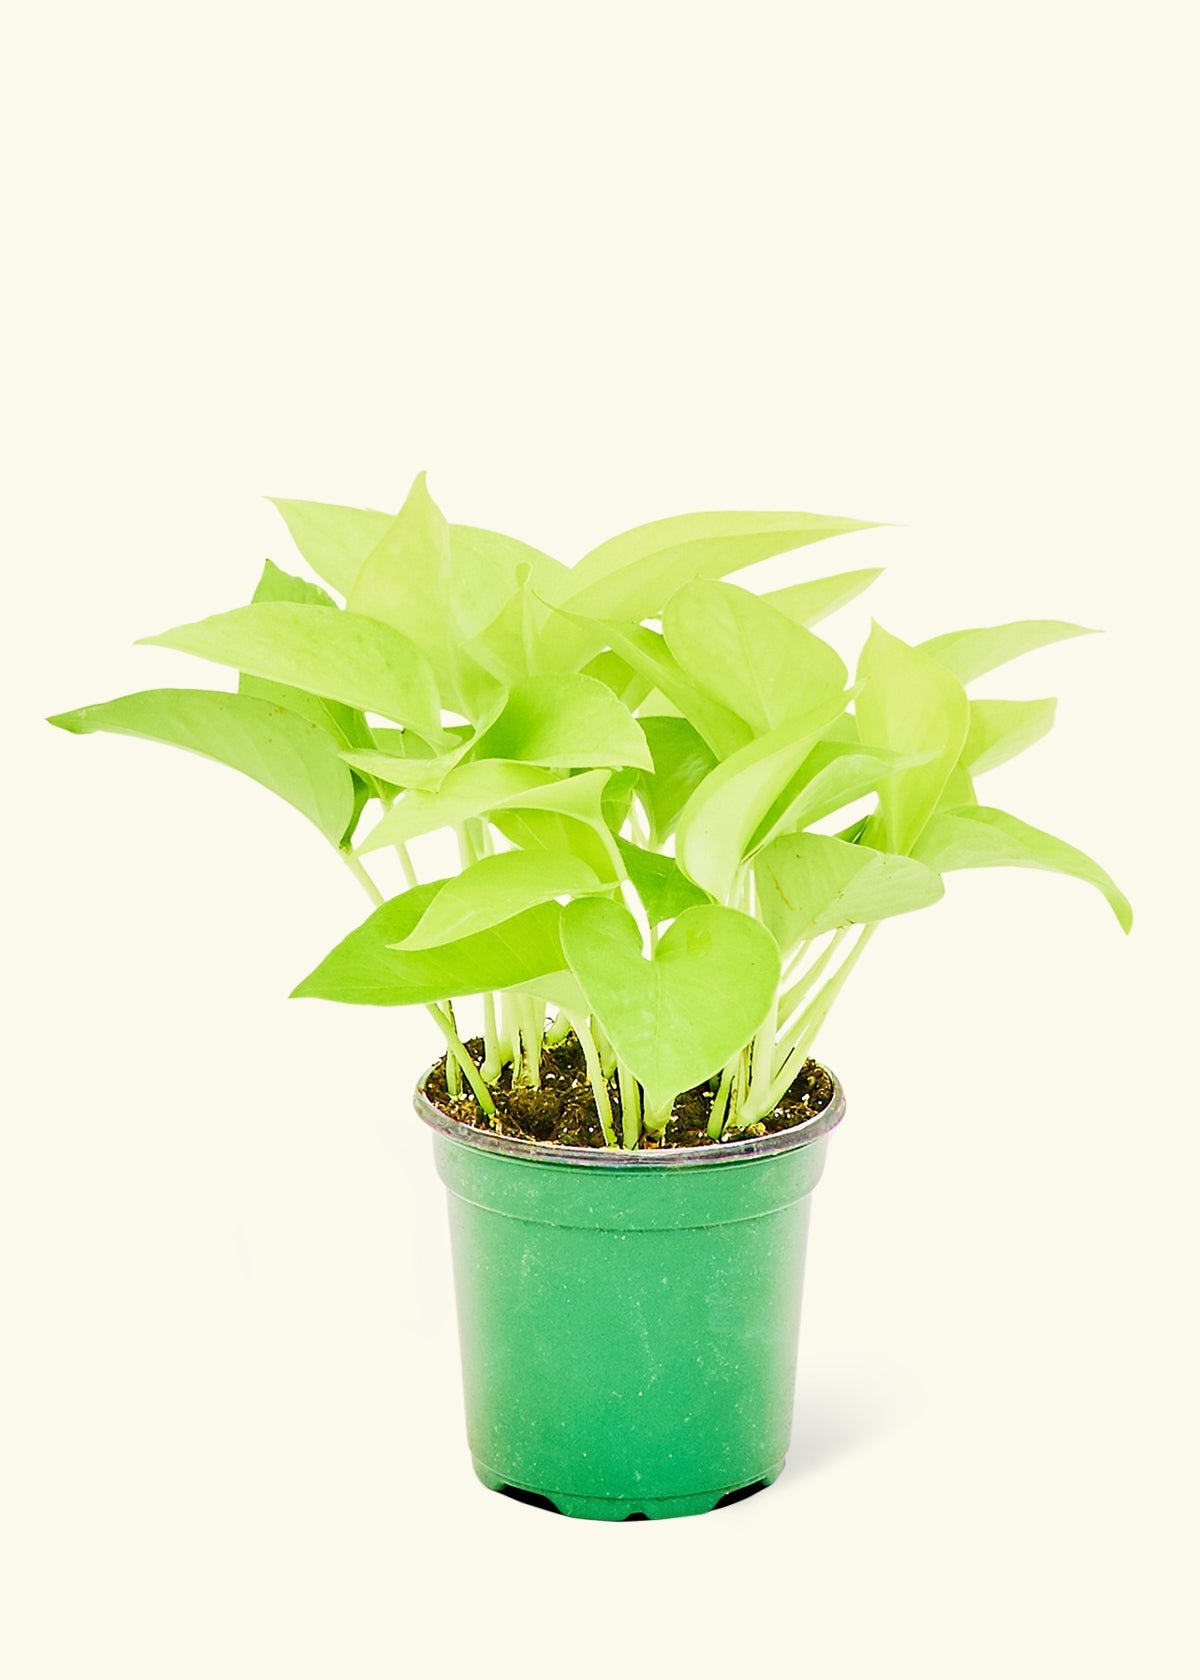 Small Neon Pothos (Epipremnum aureum) in a grow pot.